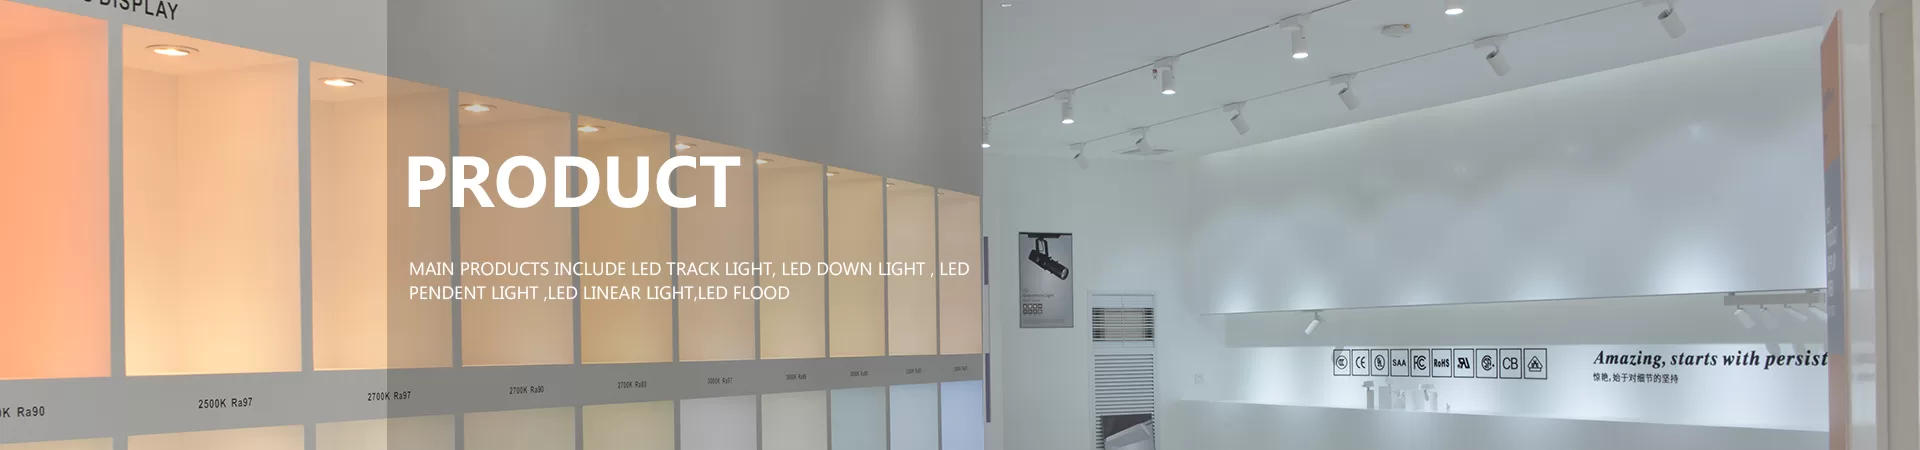 20w 30w 40w track light fixtures Anti-glare RoHs CE LED track light